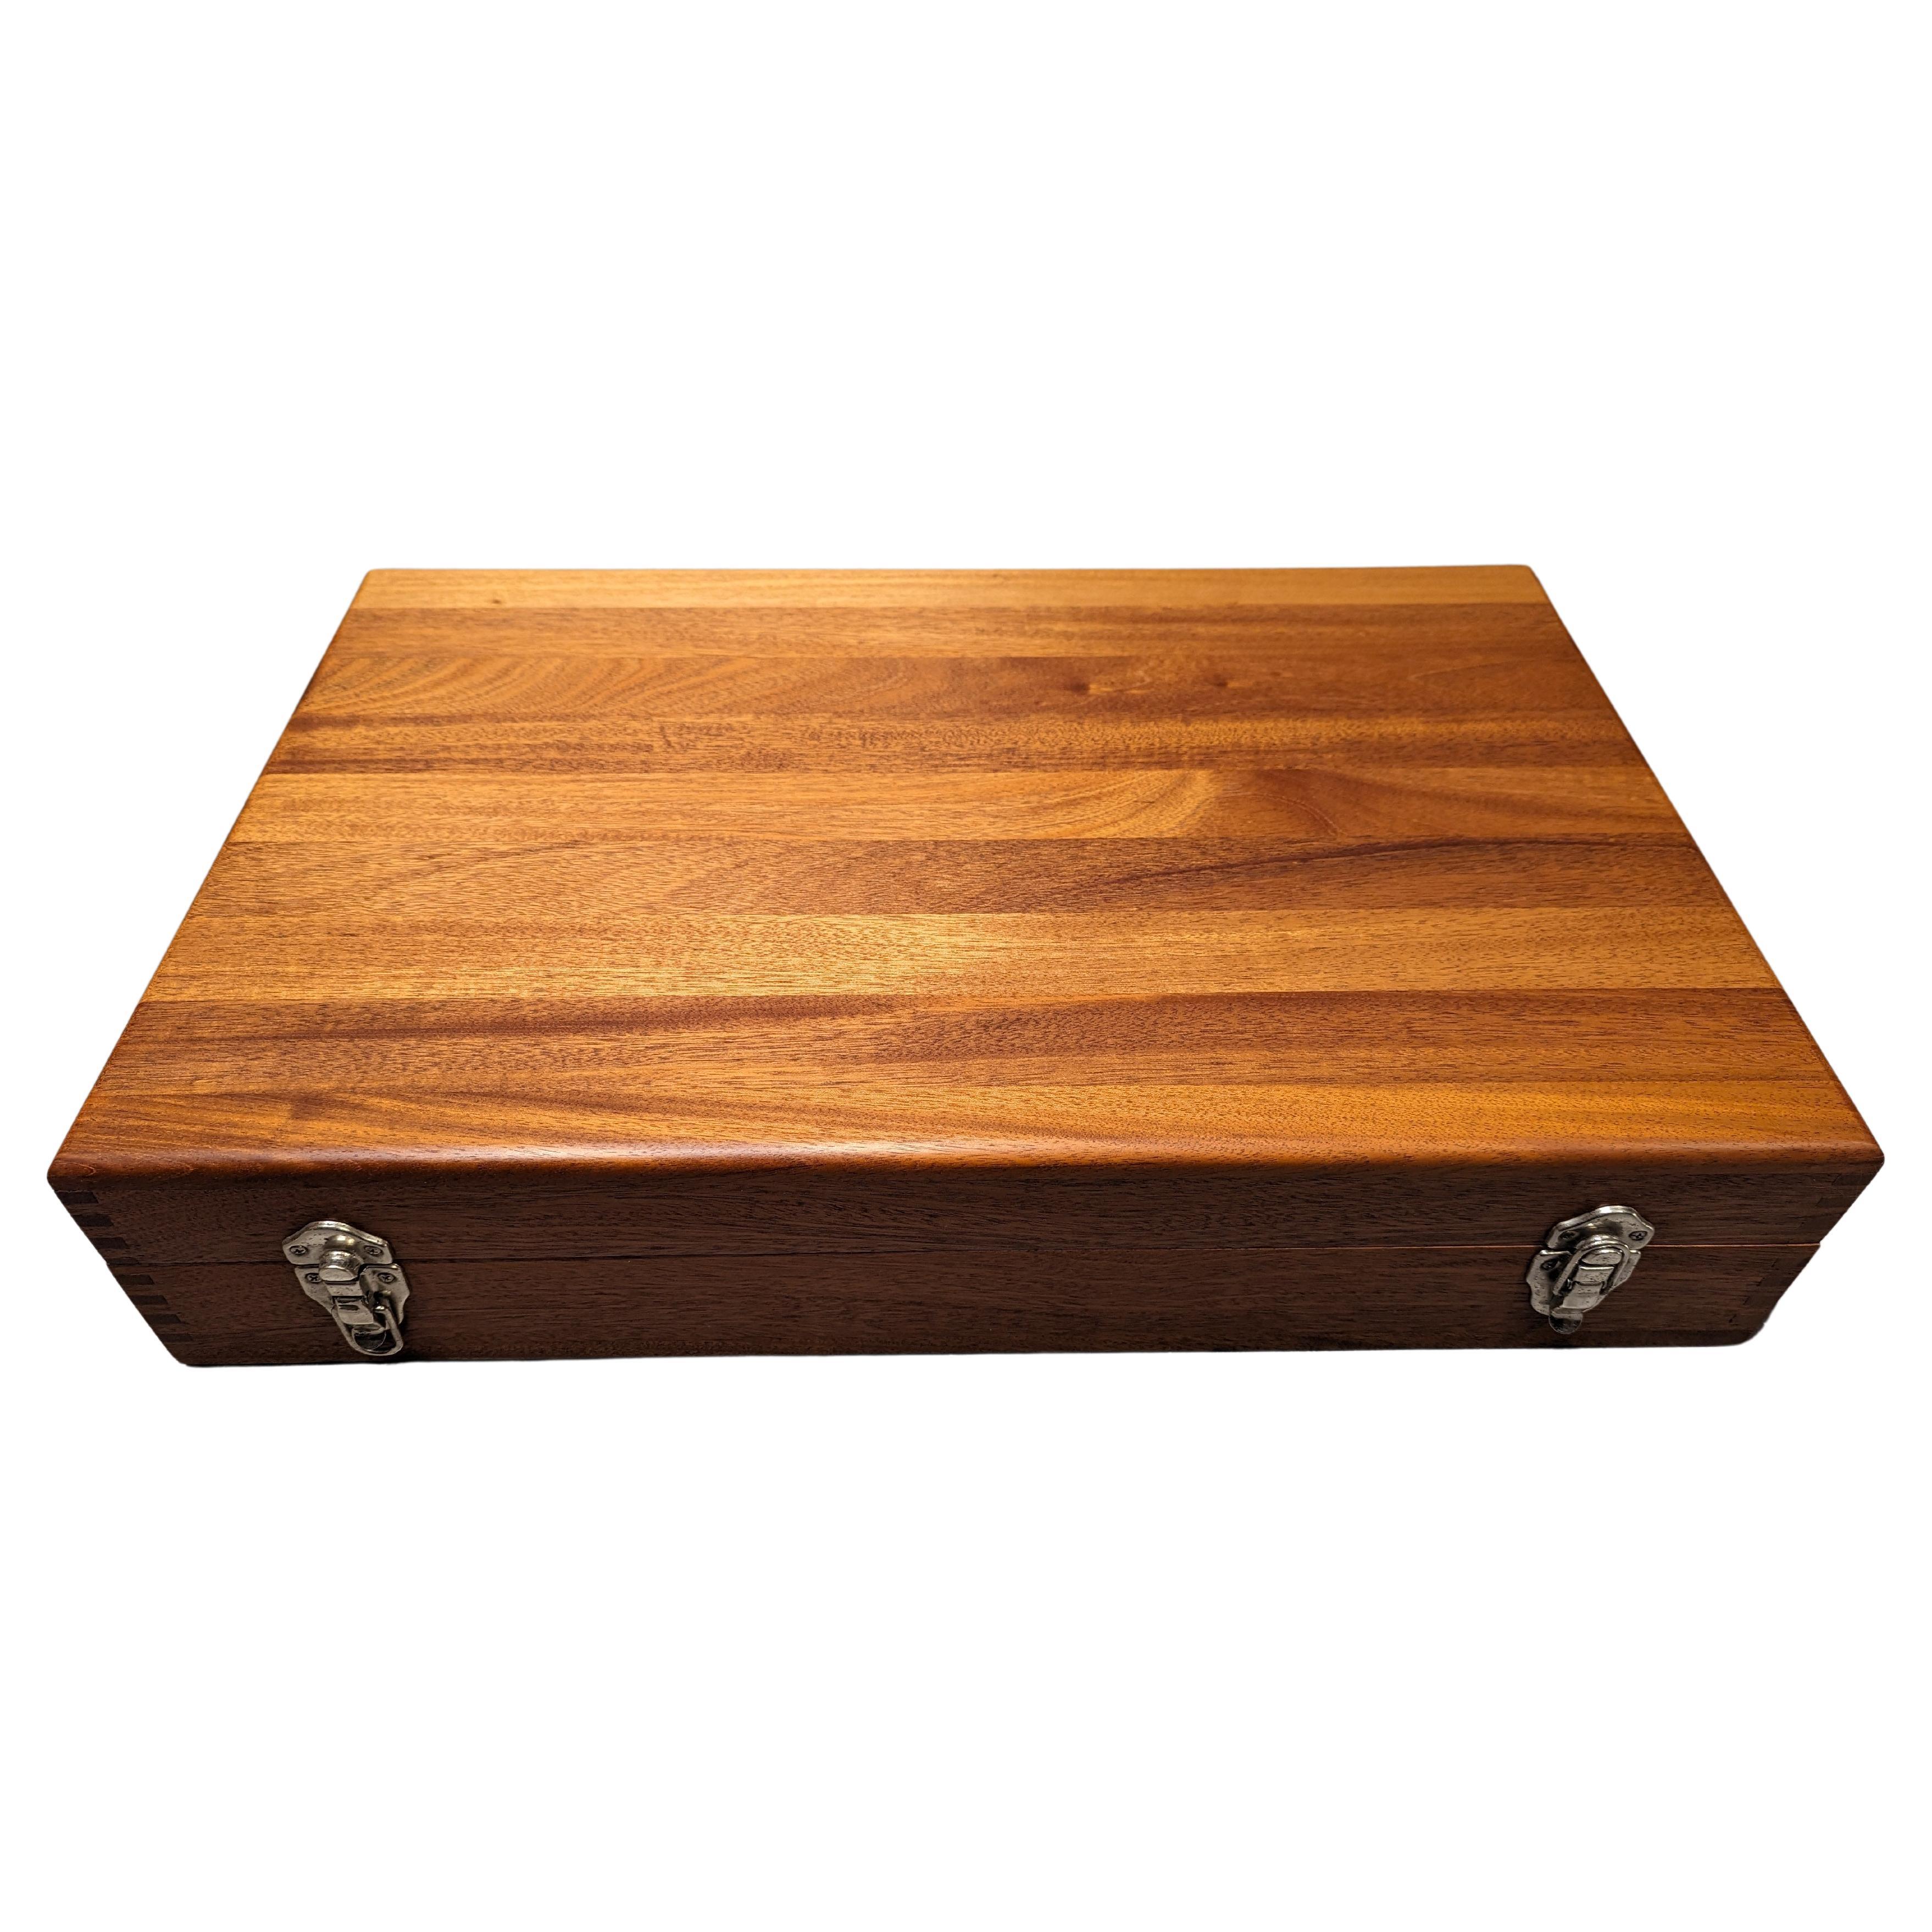 1940s Machinists tool box - mahogany